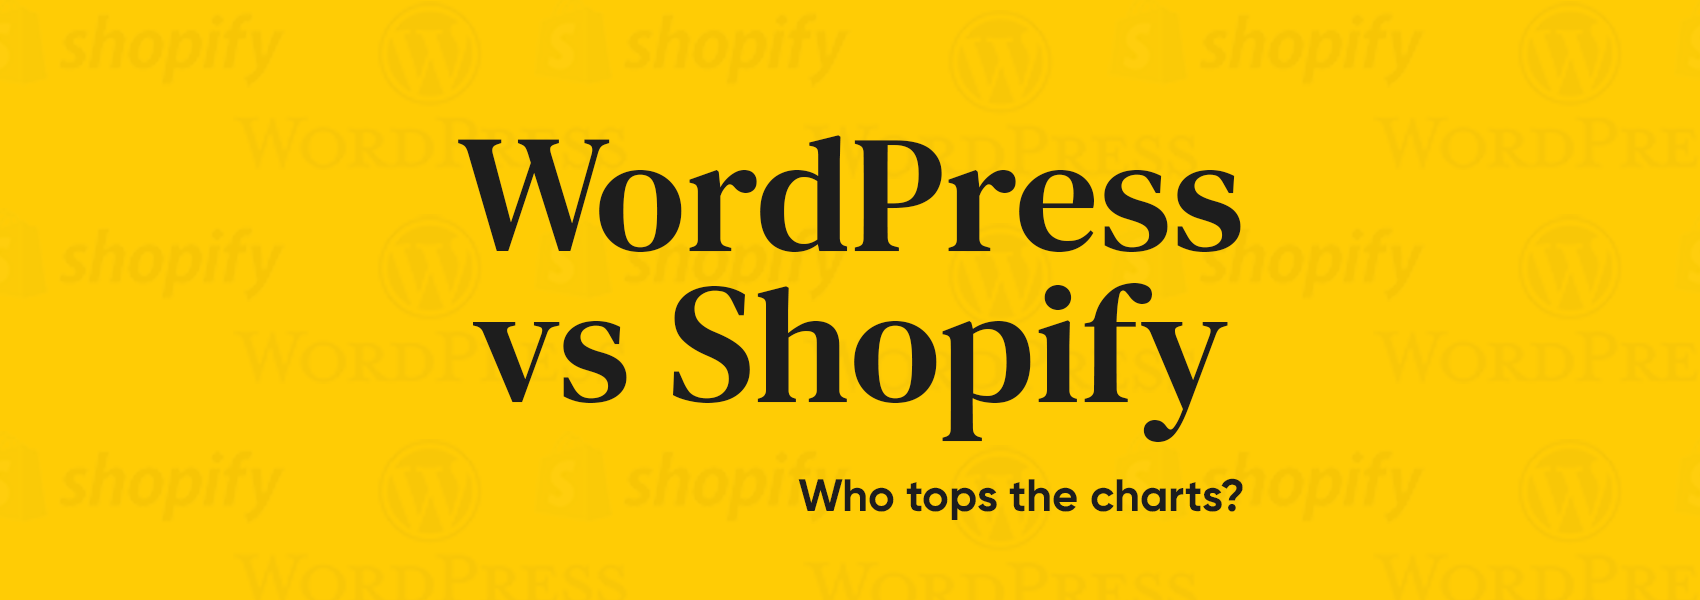 WordPress vs Shopify blog banner